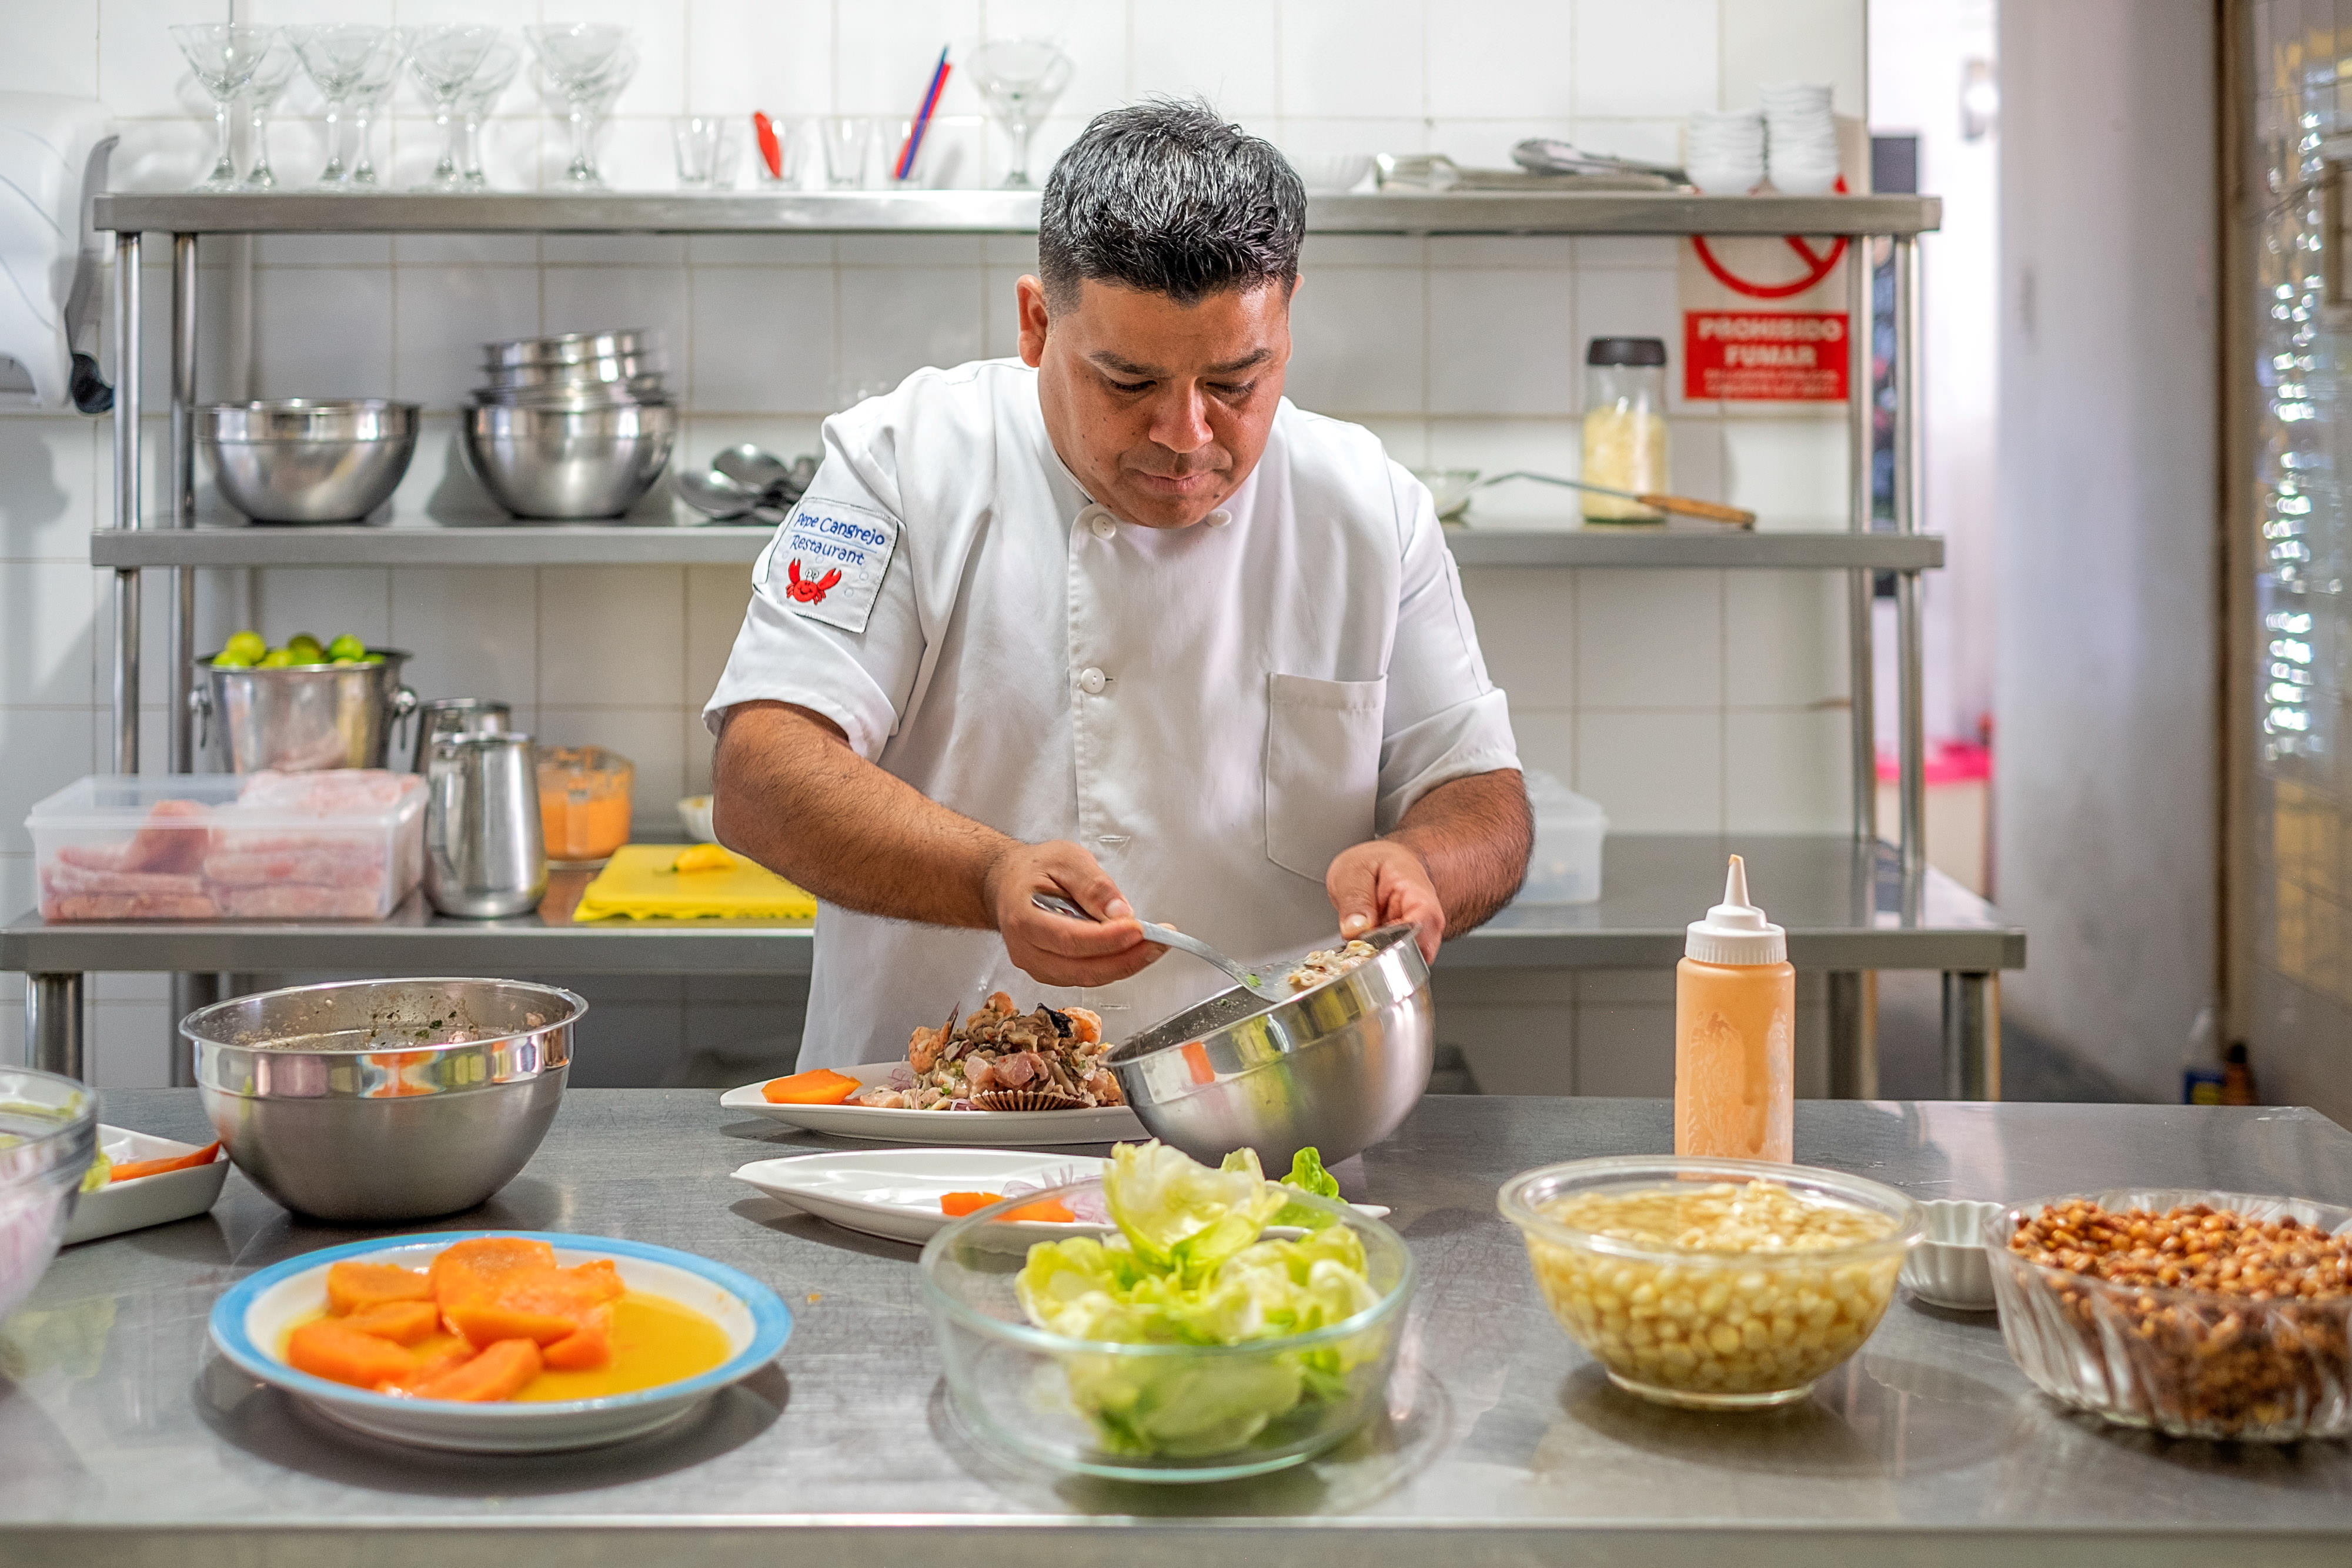 Chef Jose Fernandez owner of Pepe Cangrejo’s restaurant, prepares ceviche.